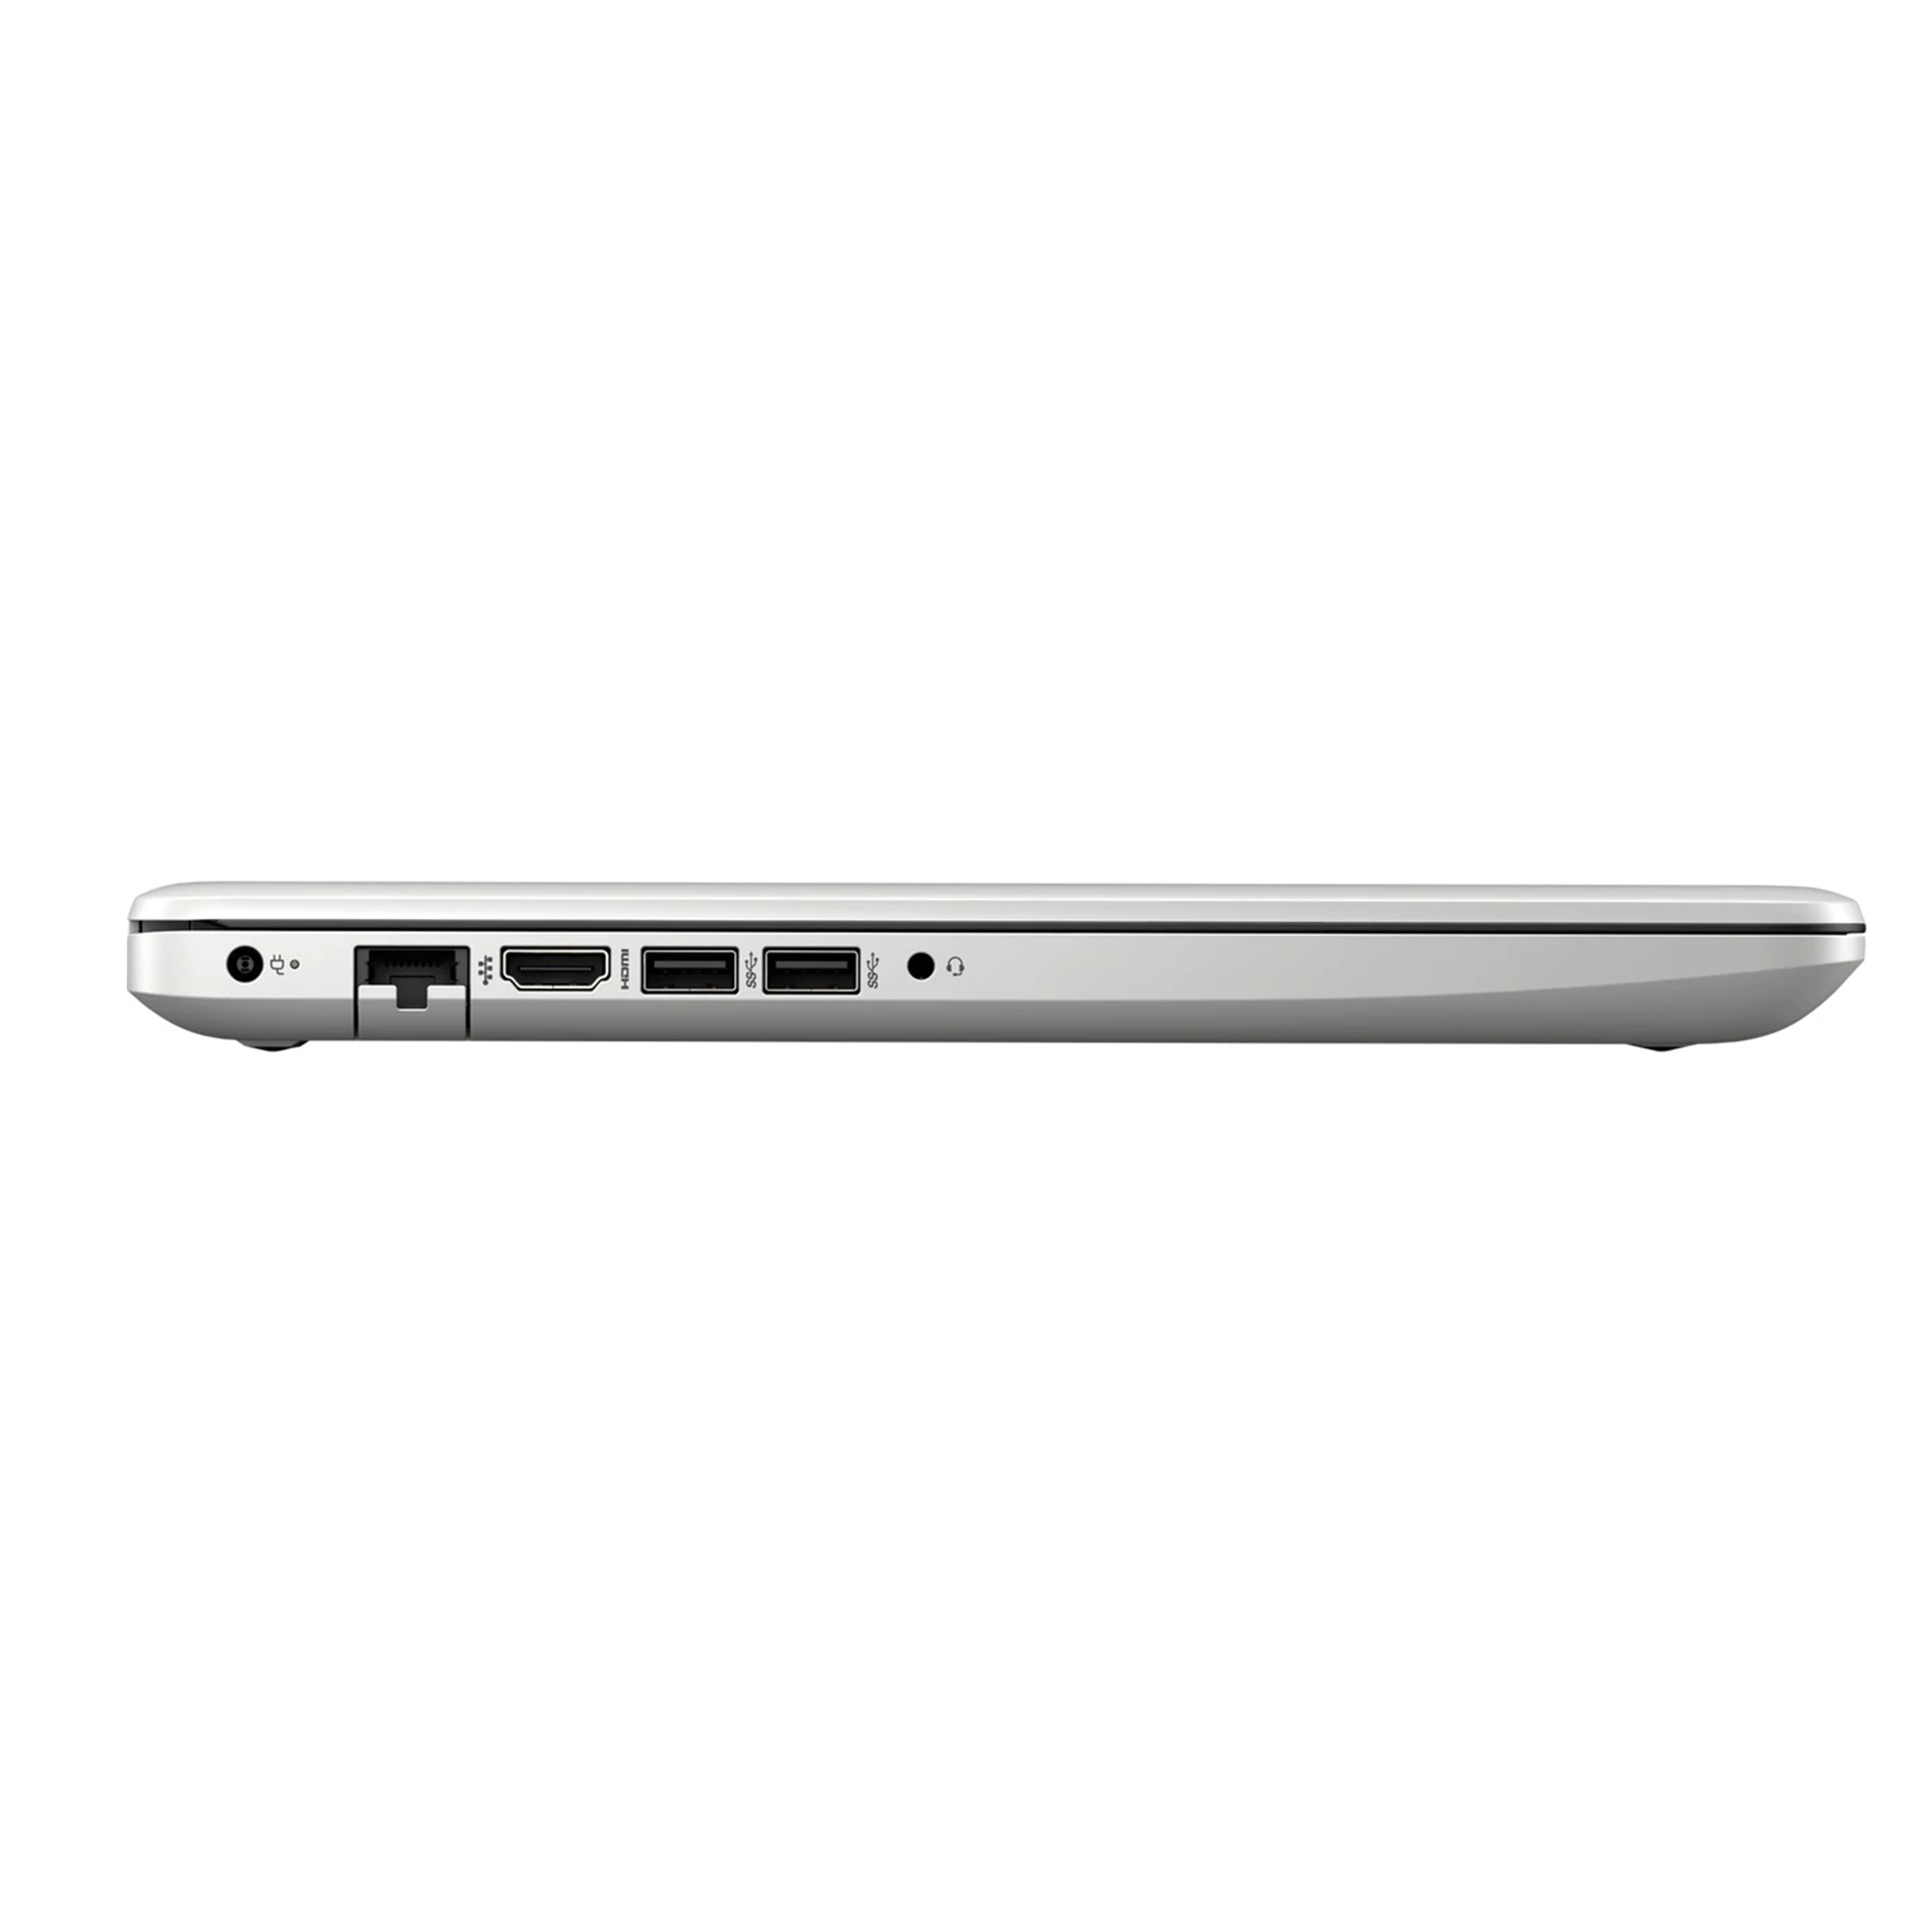  لپ تاپ 15 اینچی اچ پی مدل DA2211-A